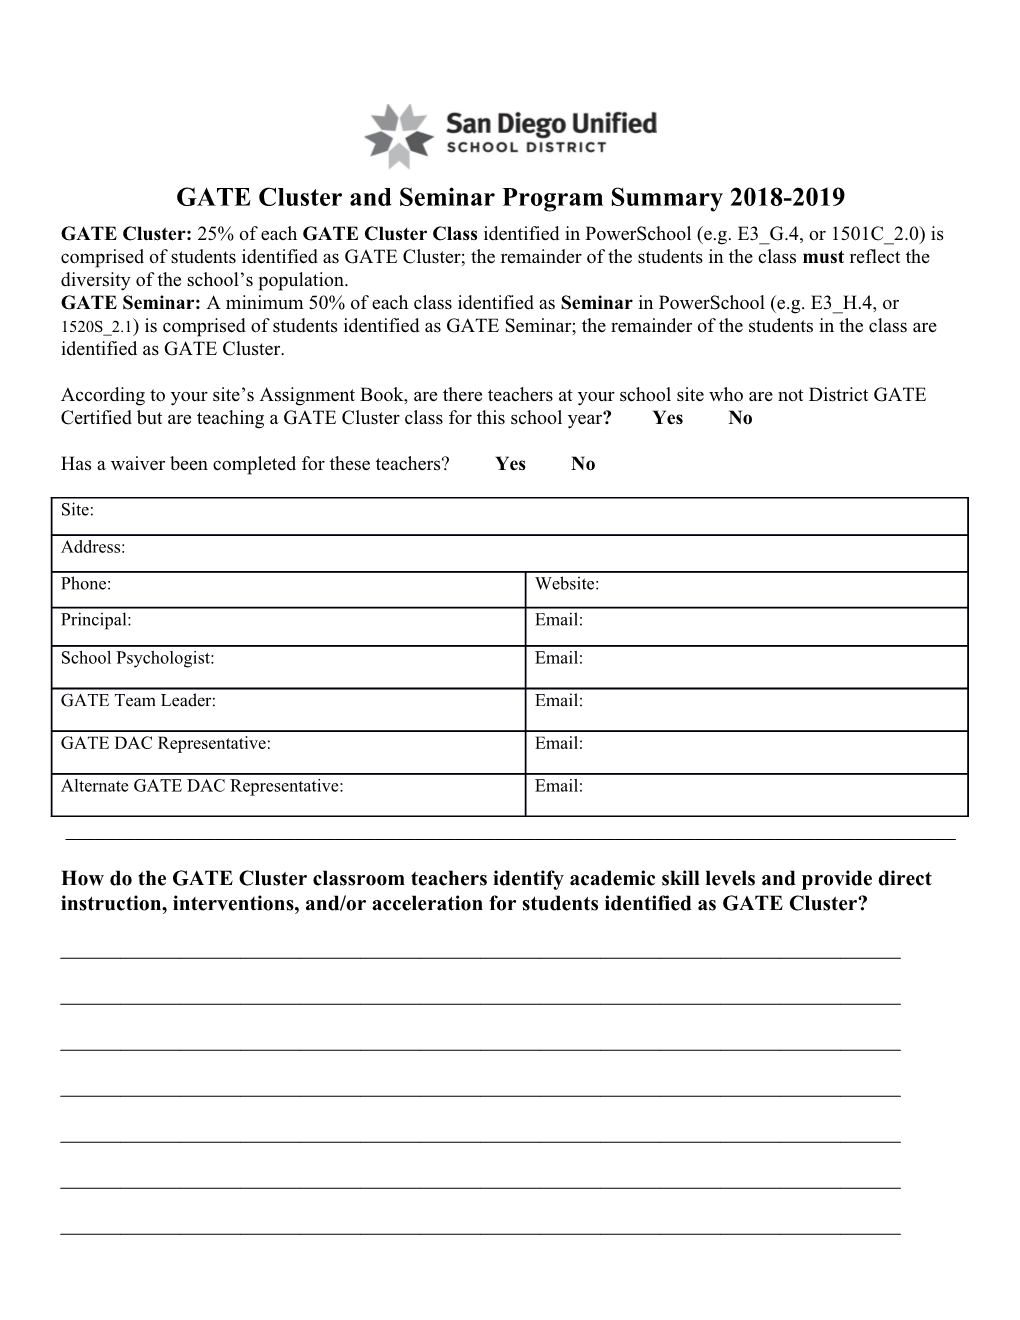 GATE Cluster and Seminar Program Summary 2018-2019